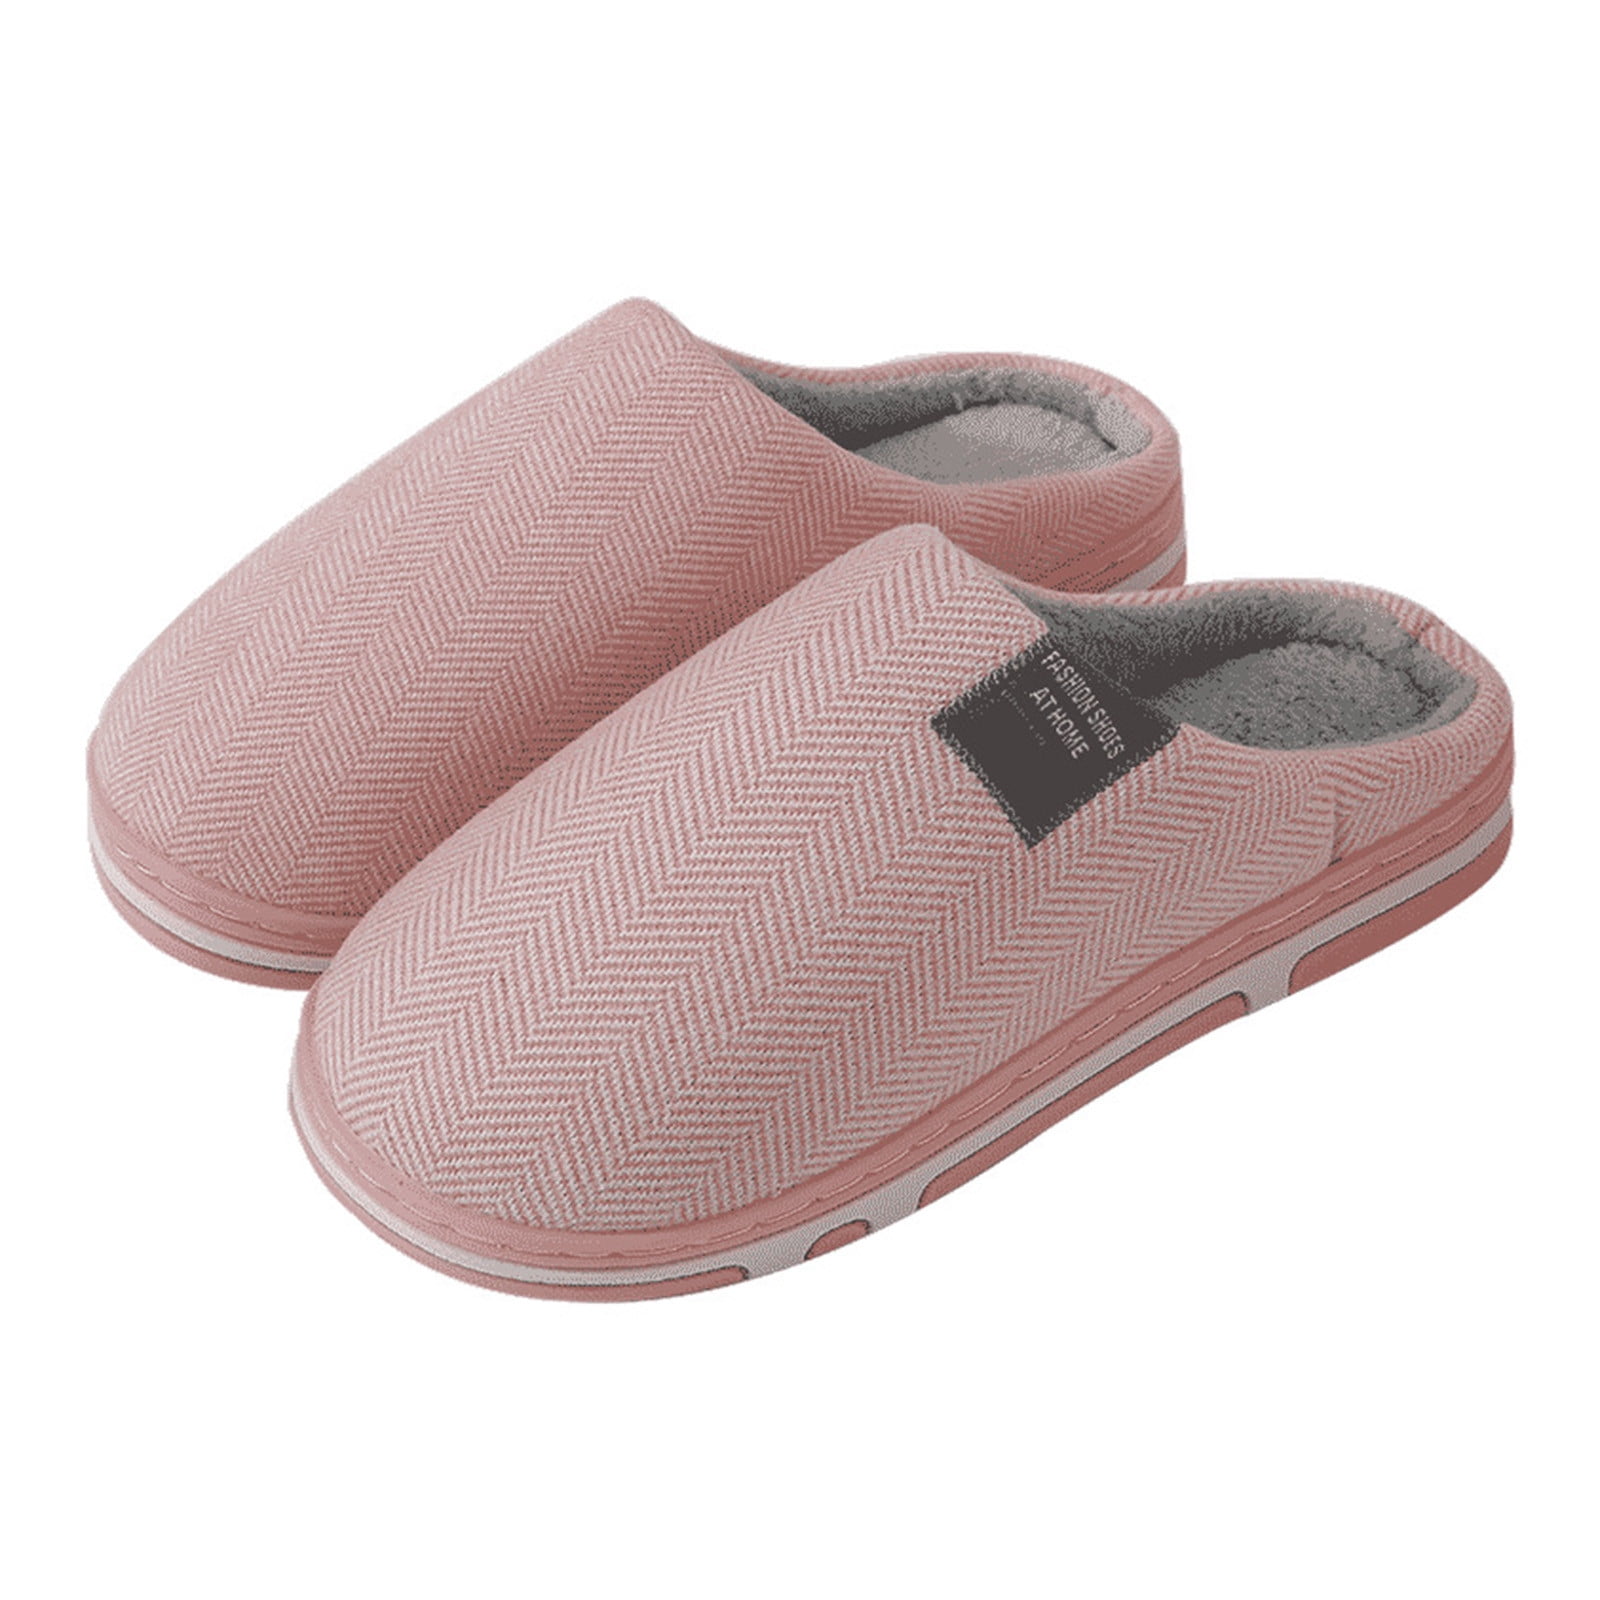 JDEFEG Soft Sole Slippers for Women Shoes Men's Soft-Soled Indoor